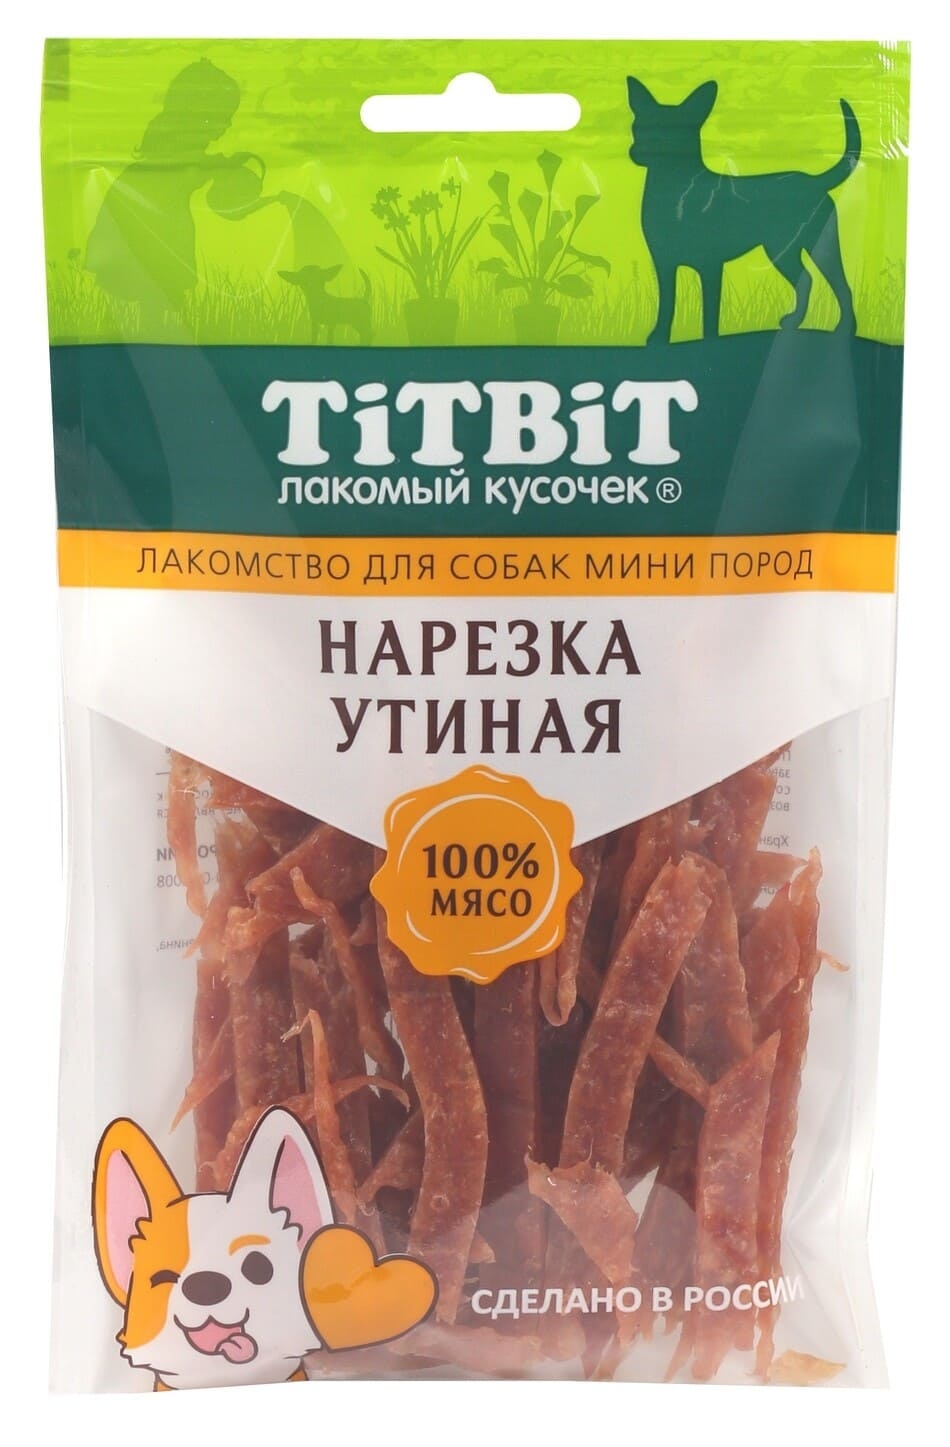 лакомство для собак titbit нарезка утиная 70 г TiTBiT TiTBiT нарезка утиная для собак мини пород (70 г)